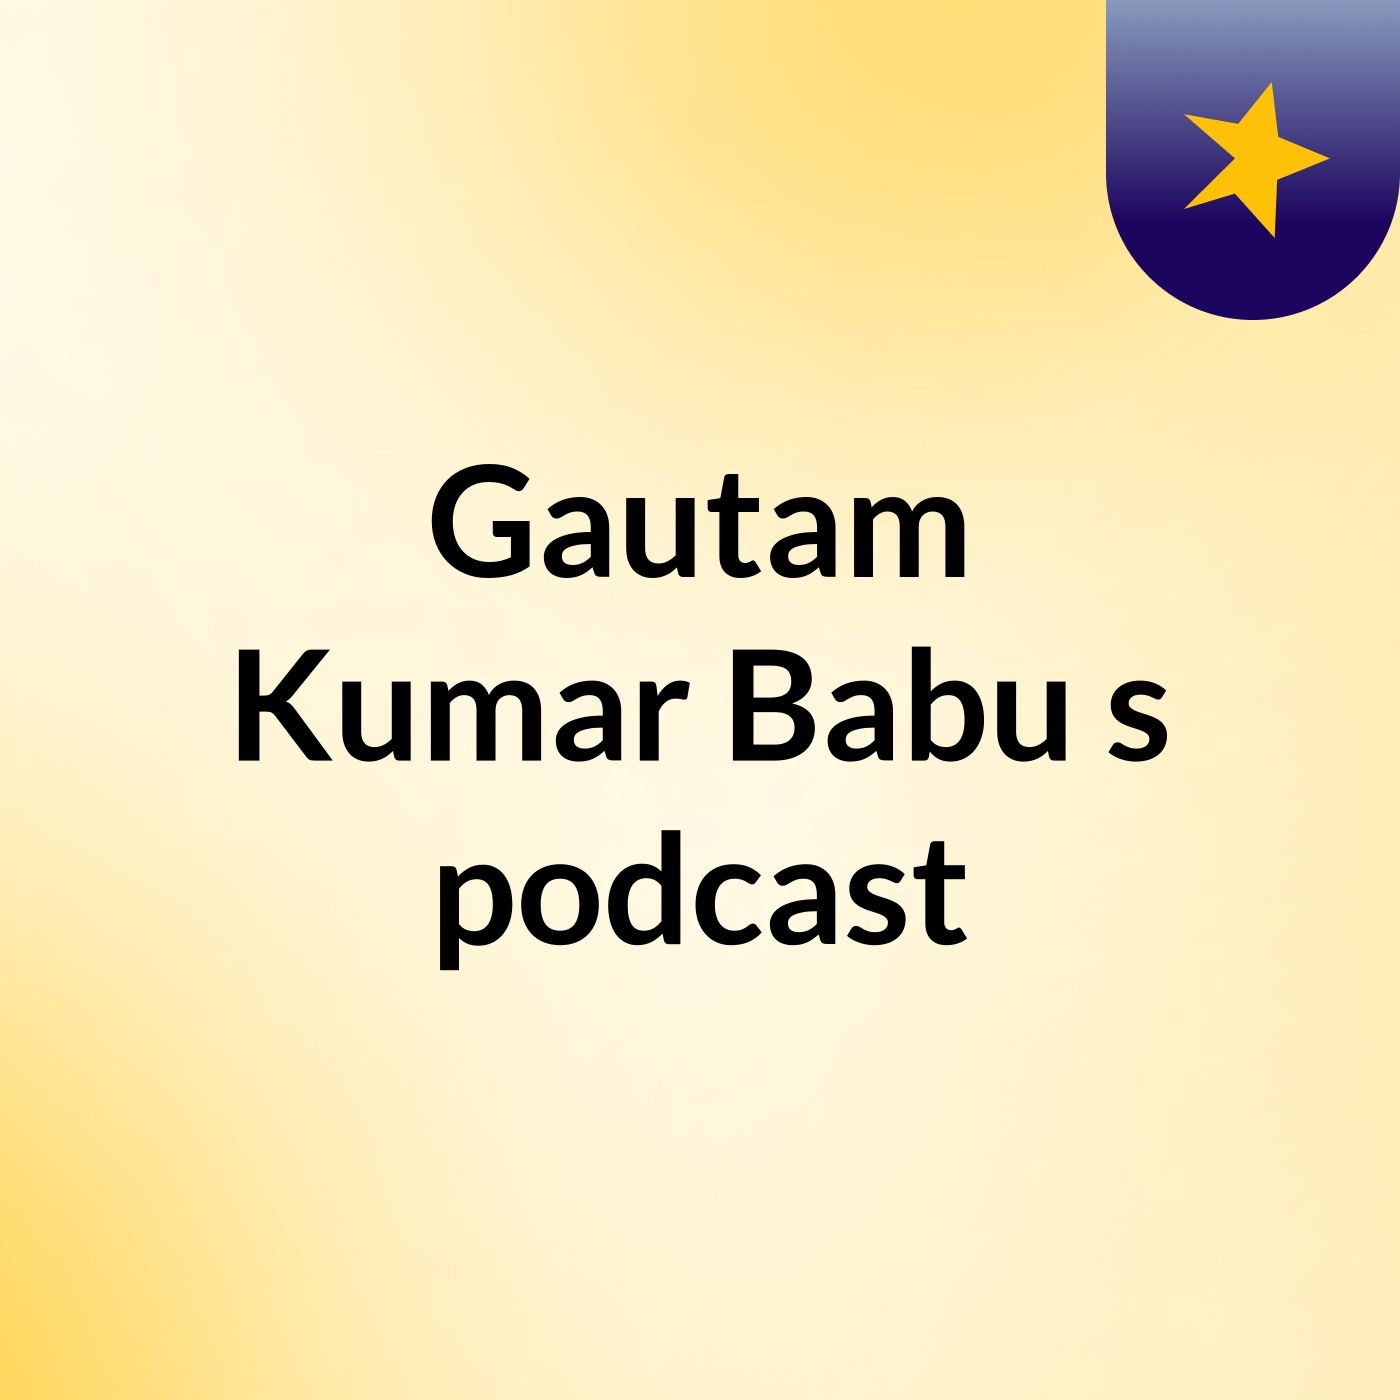 Gautam Kumar Babu's podcast